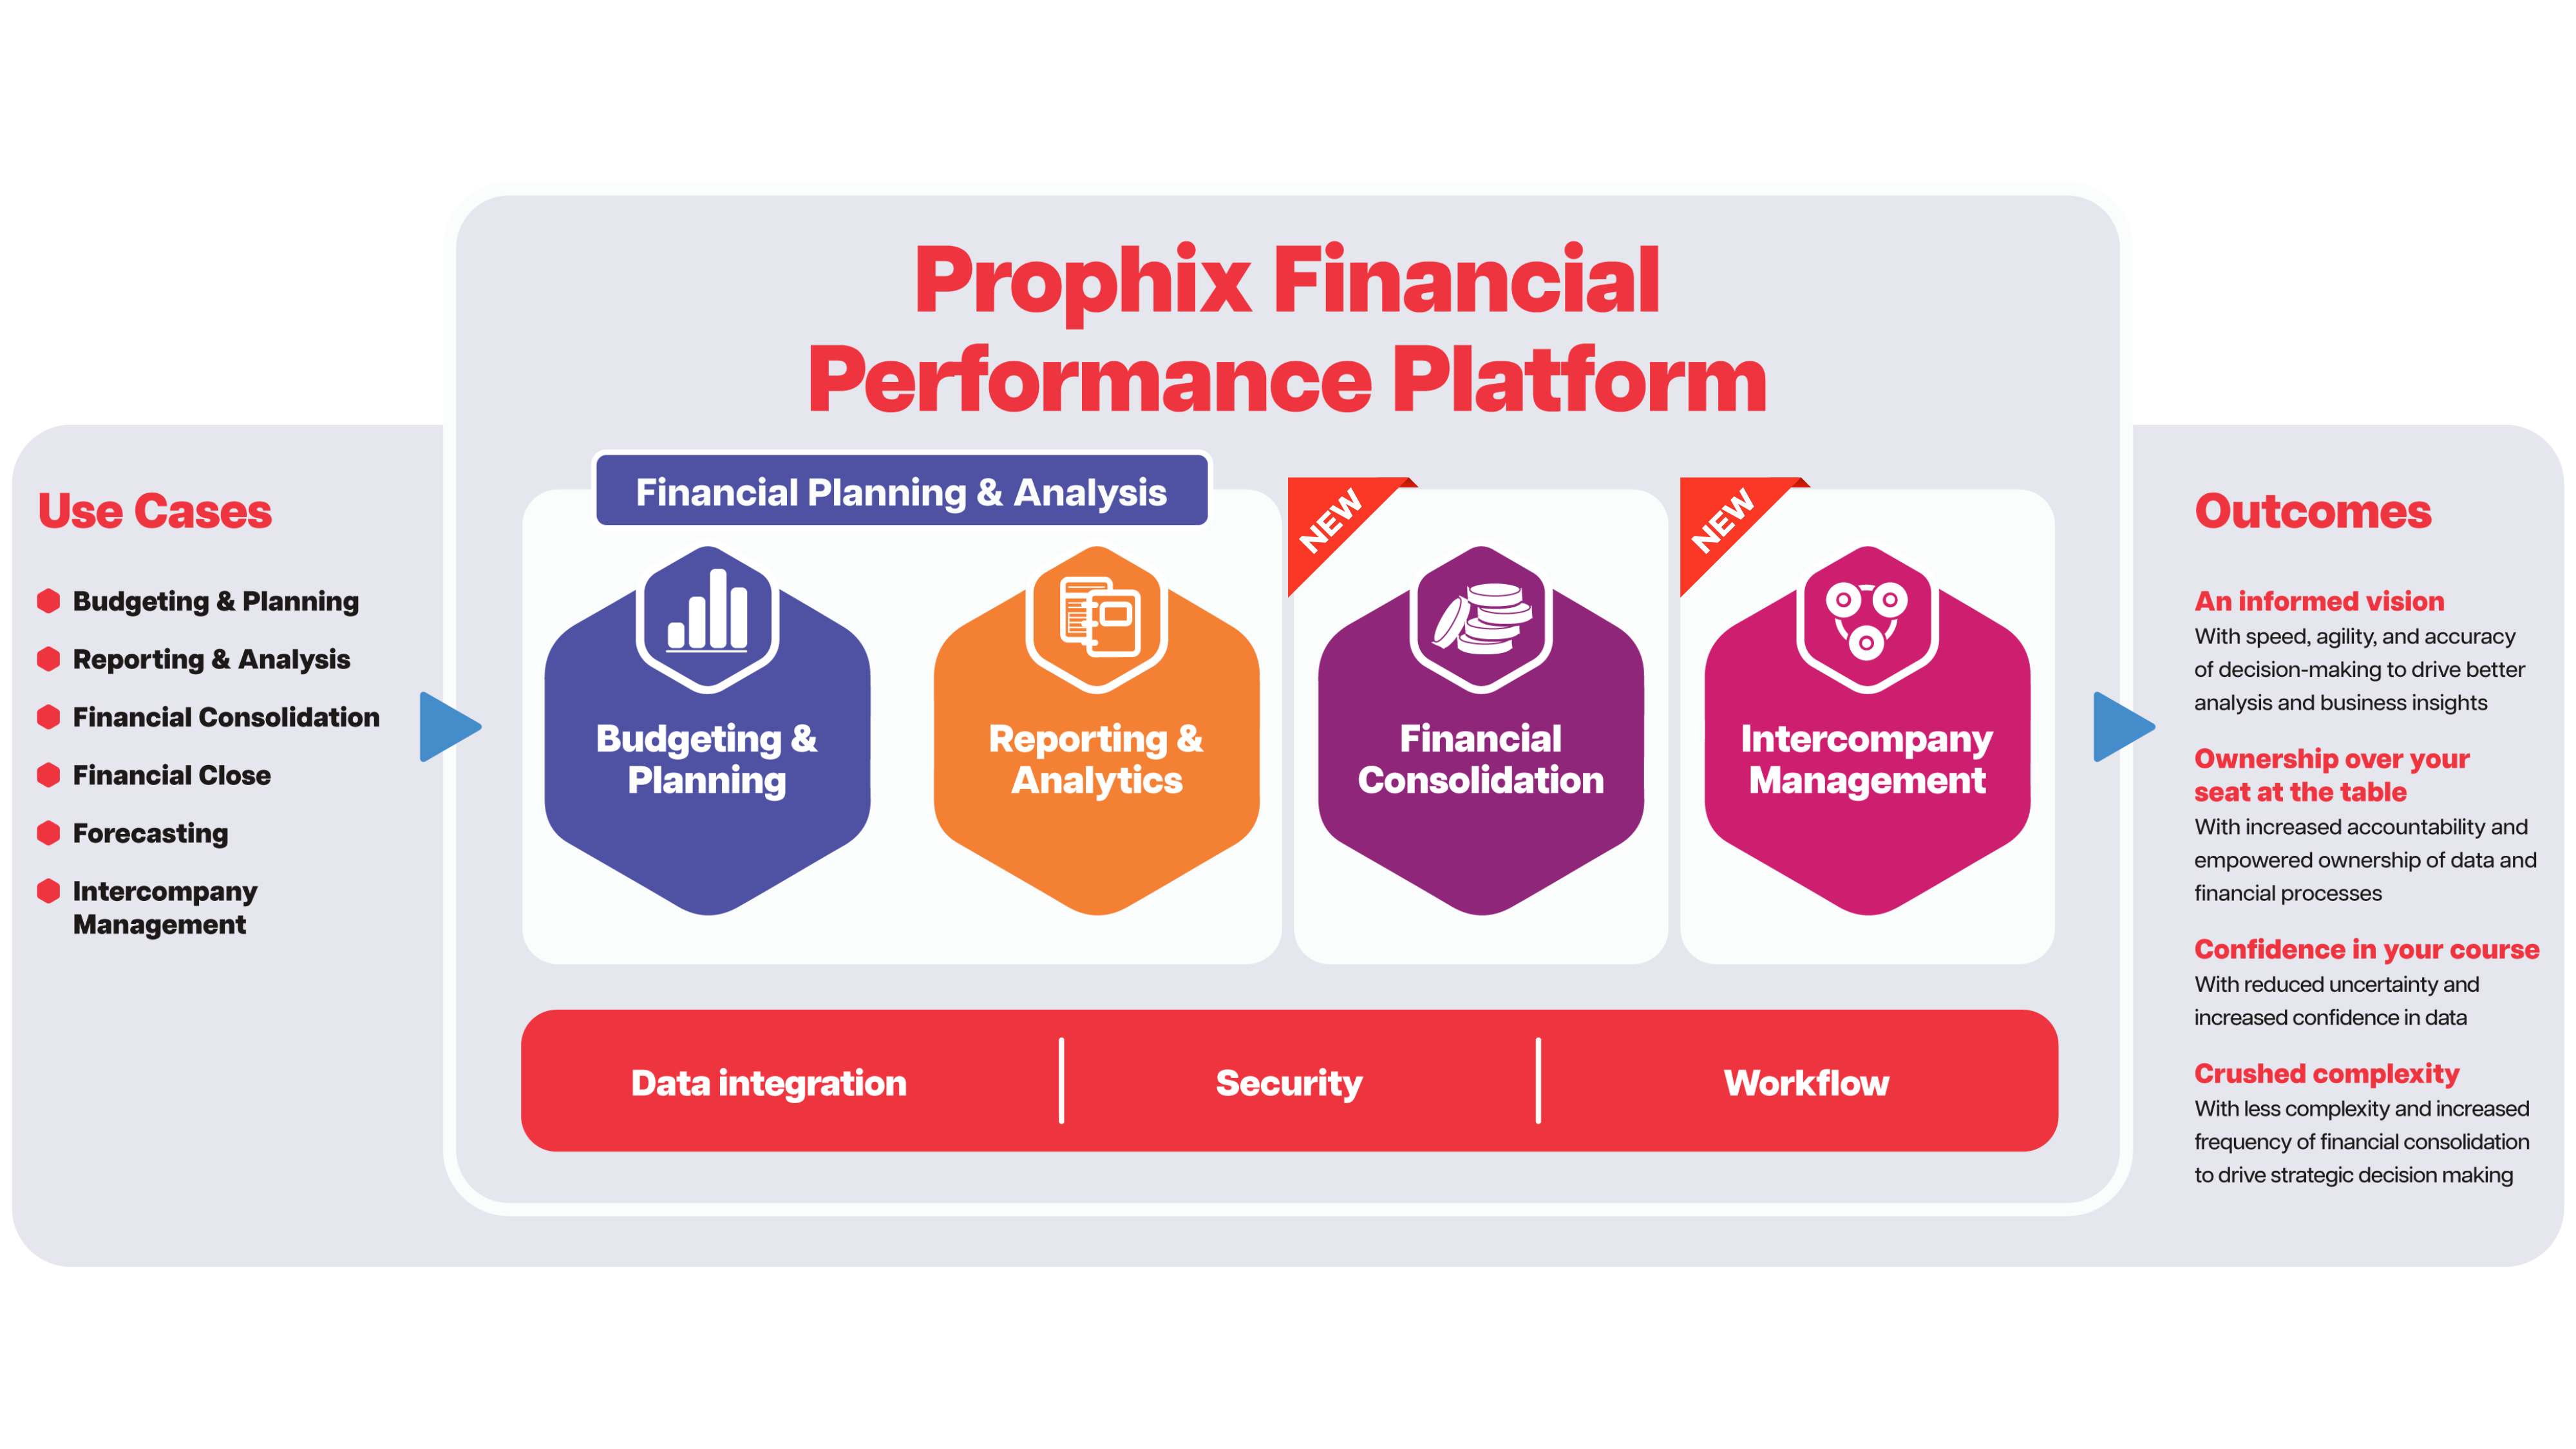 A Complete Financial Performance Platform